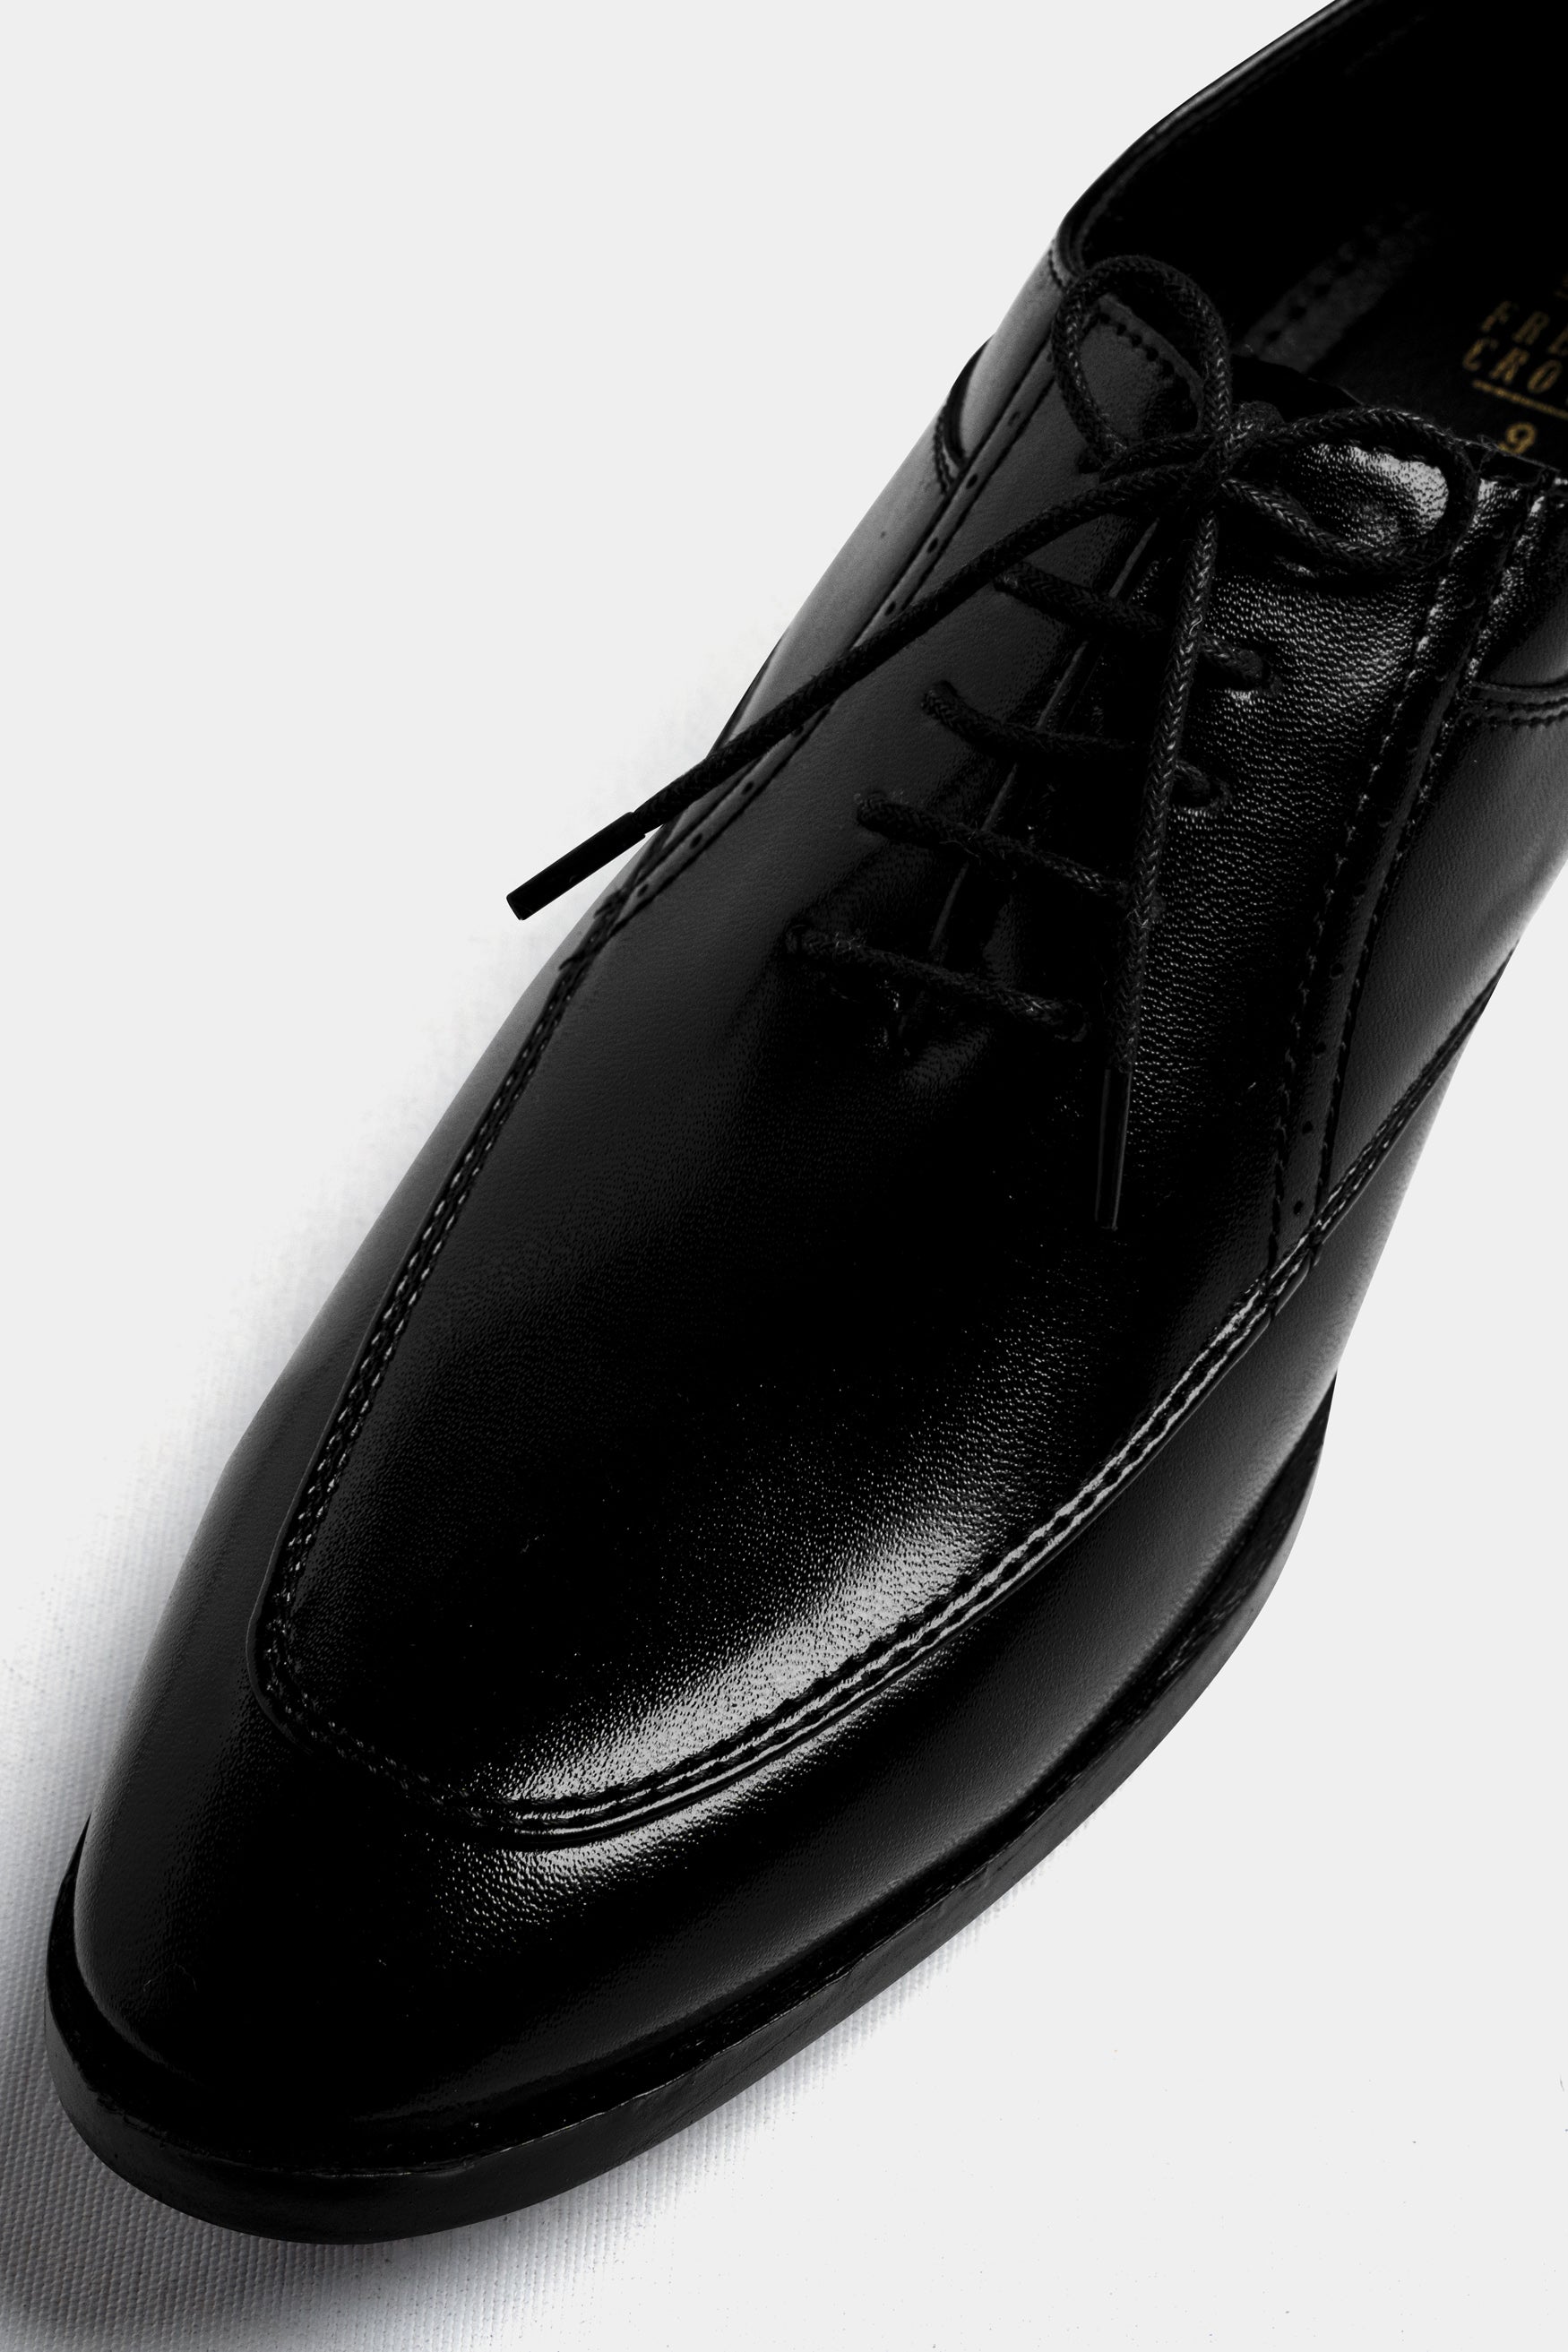 Jade Black Vegan Leather Oxford Shoes